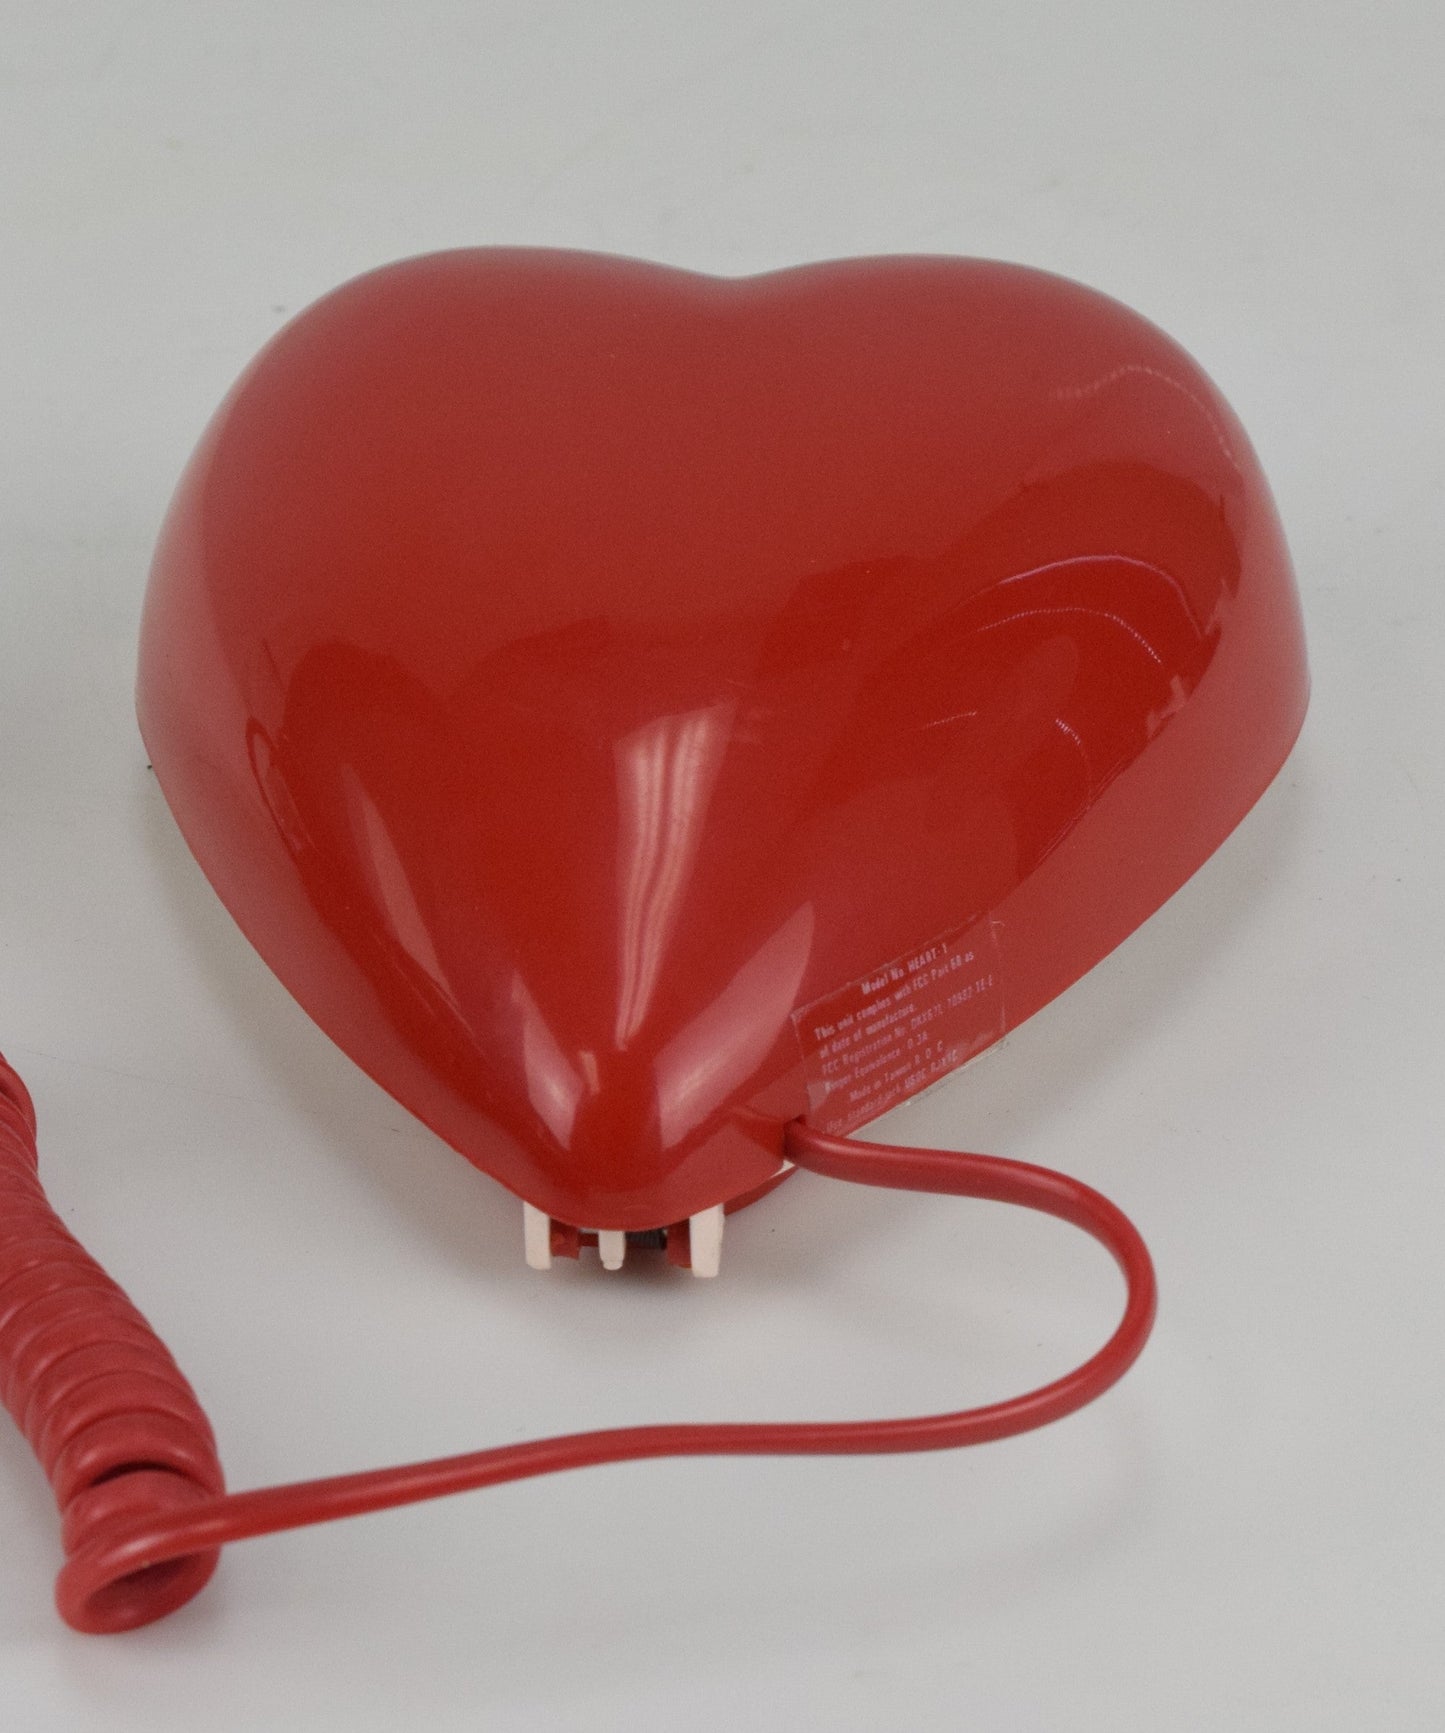 Heart 1 Novelty Phone